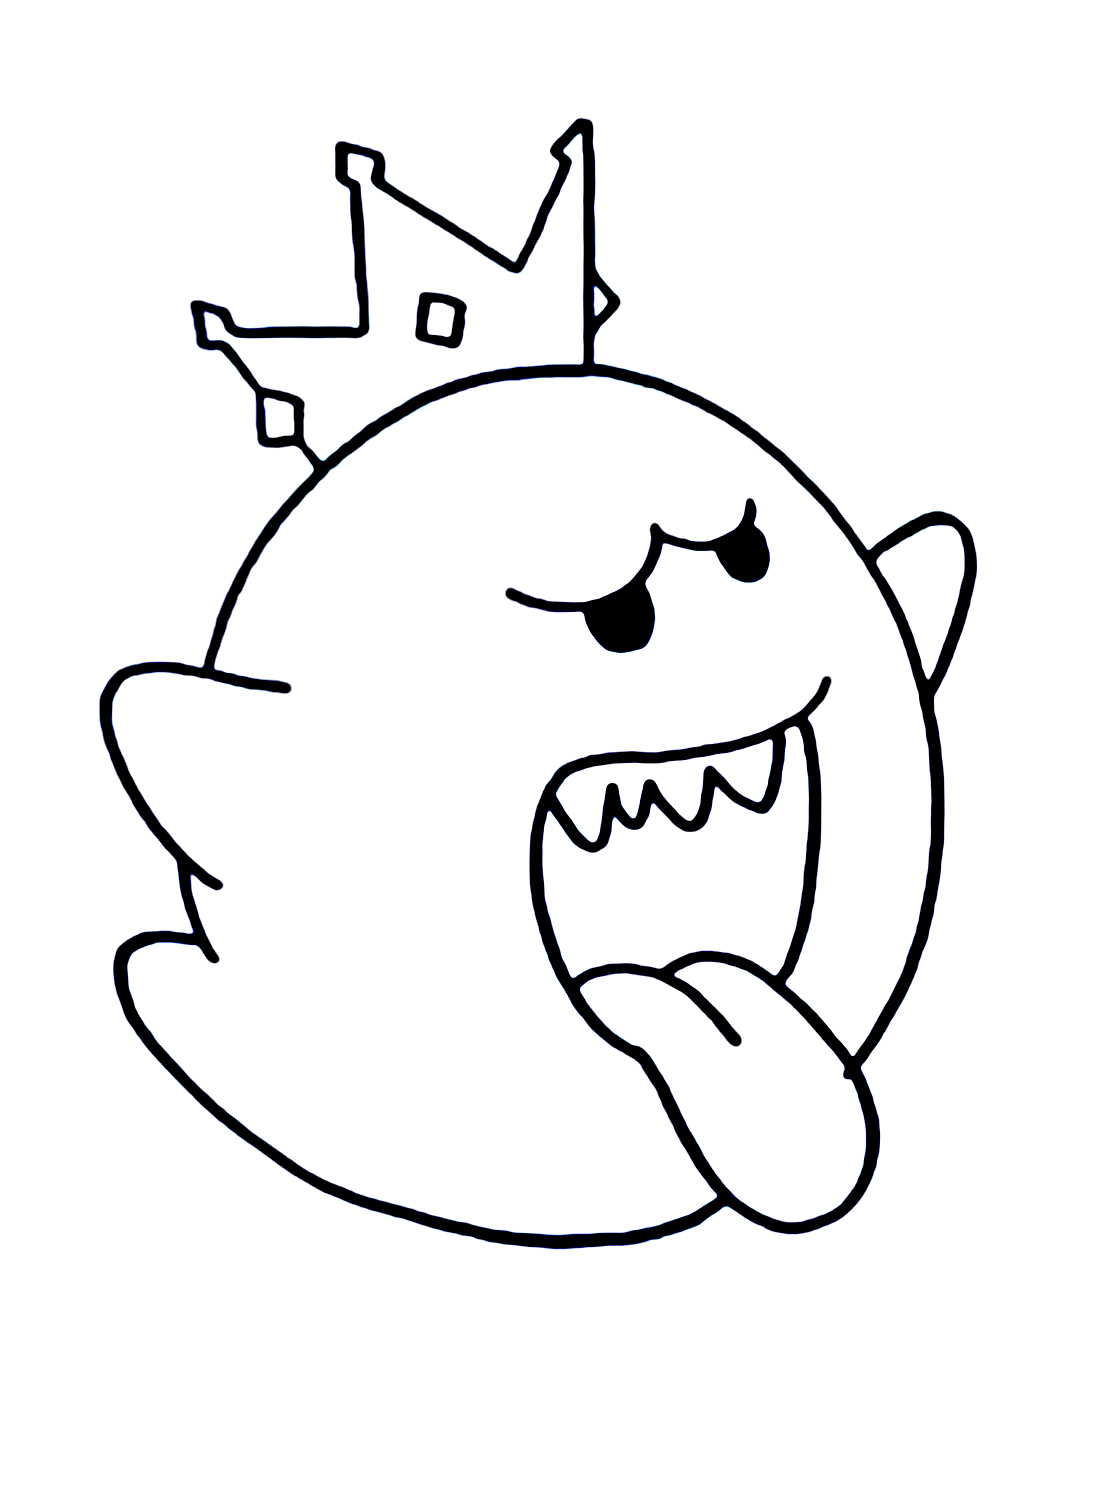 Super Mario King Boo da King Boo